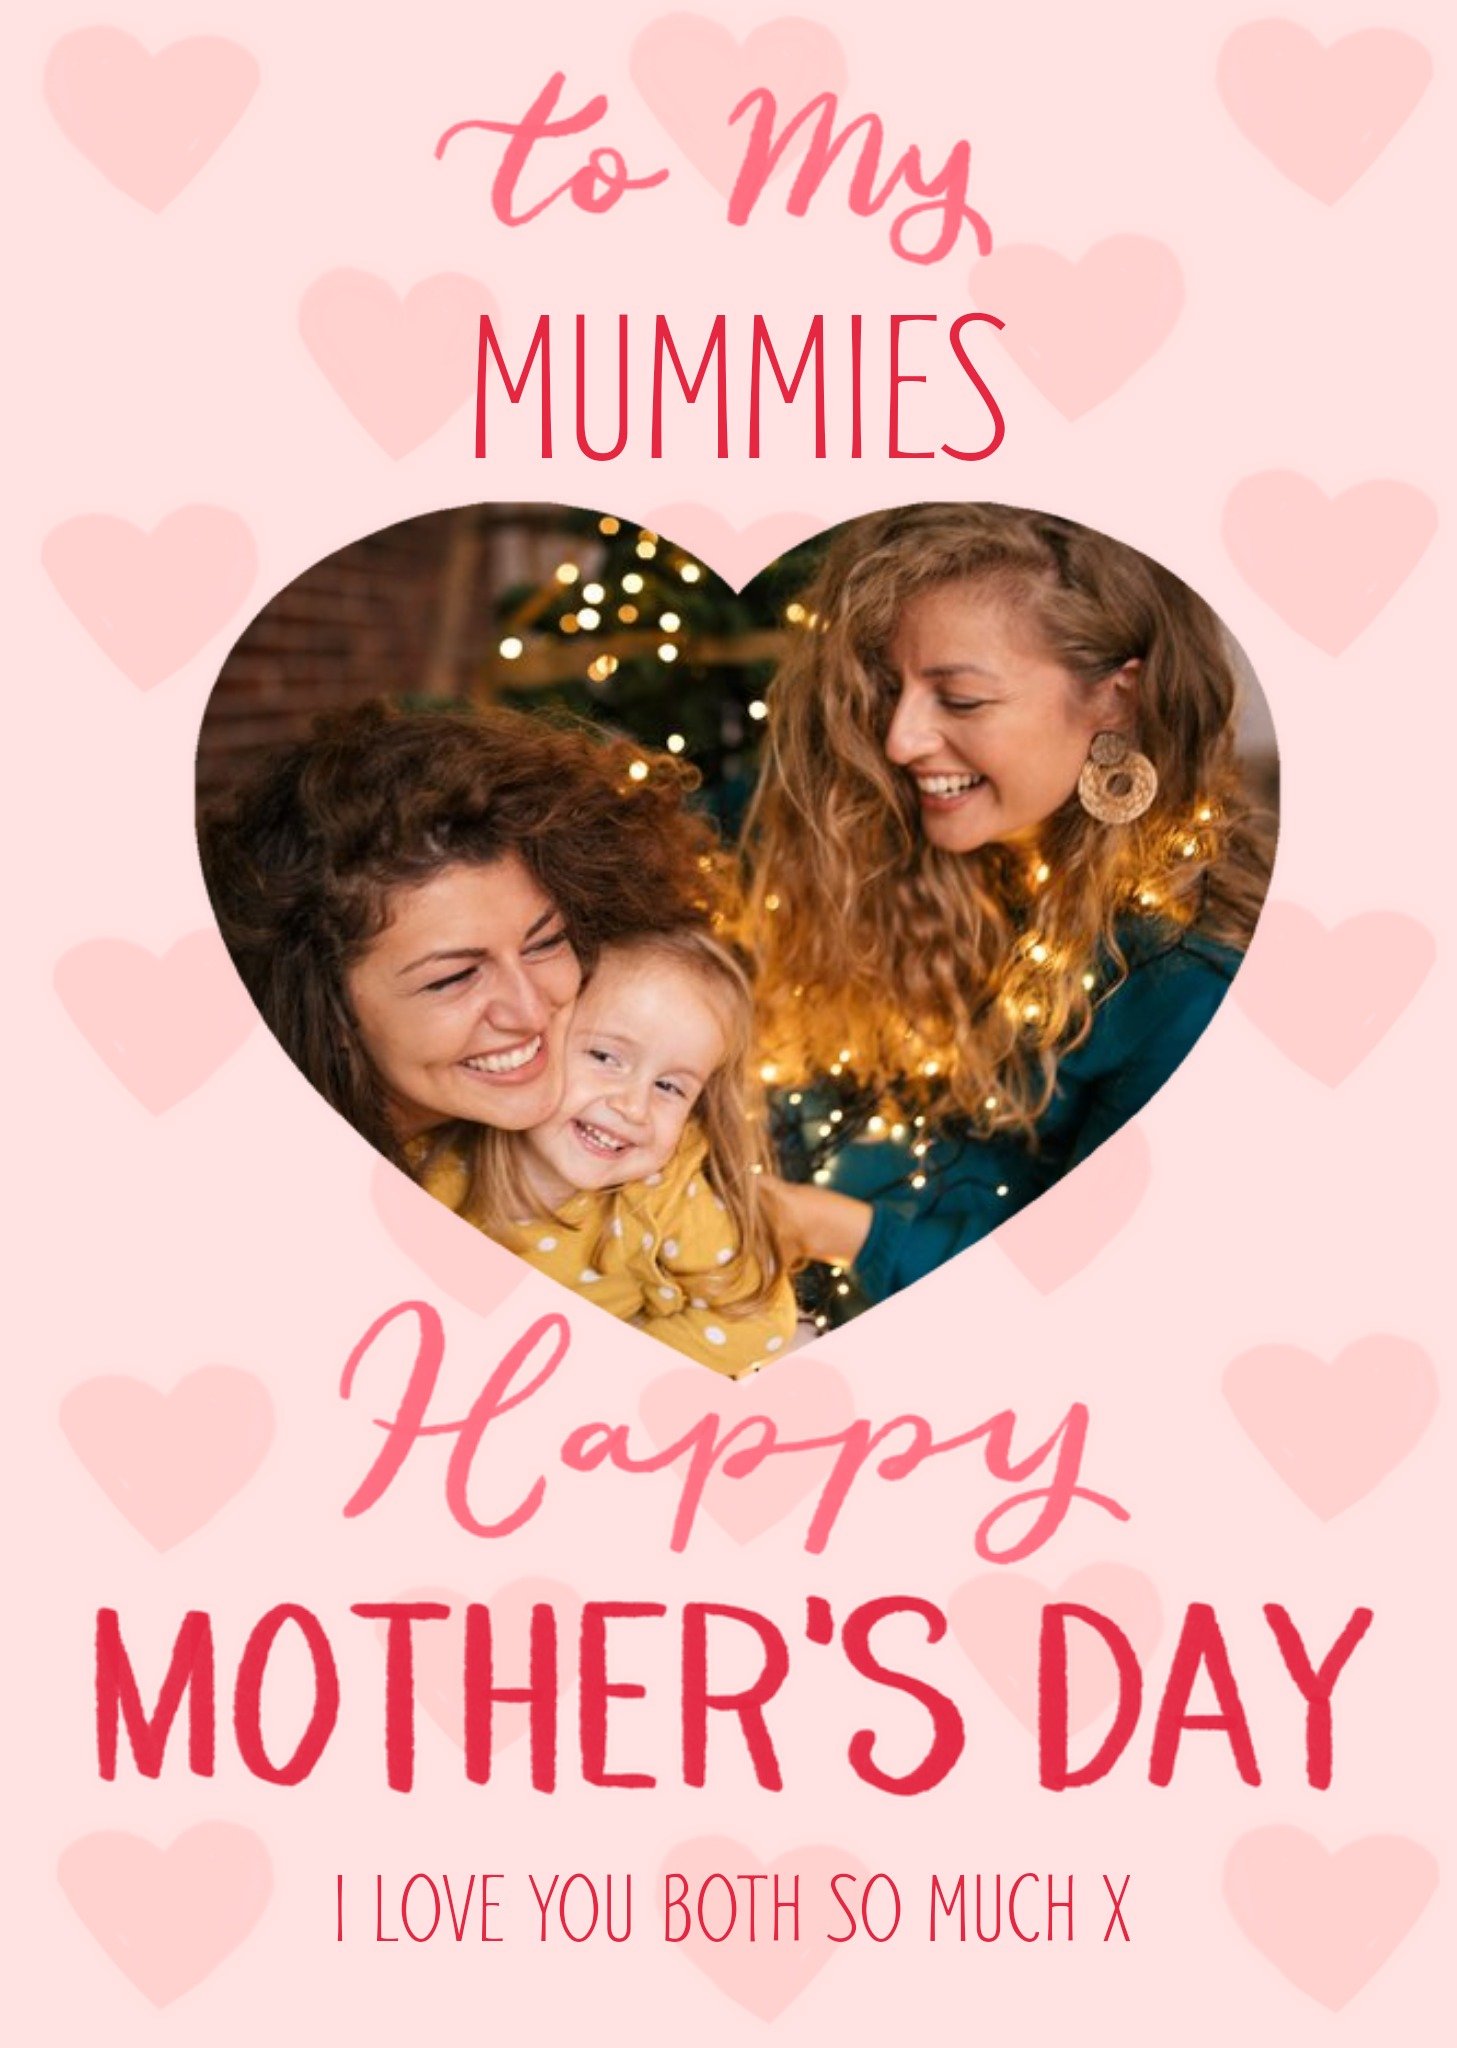 Moonpig Okey Dokey Design Cute Mummies Heart Photo Mother's Day Card Ecard